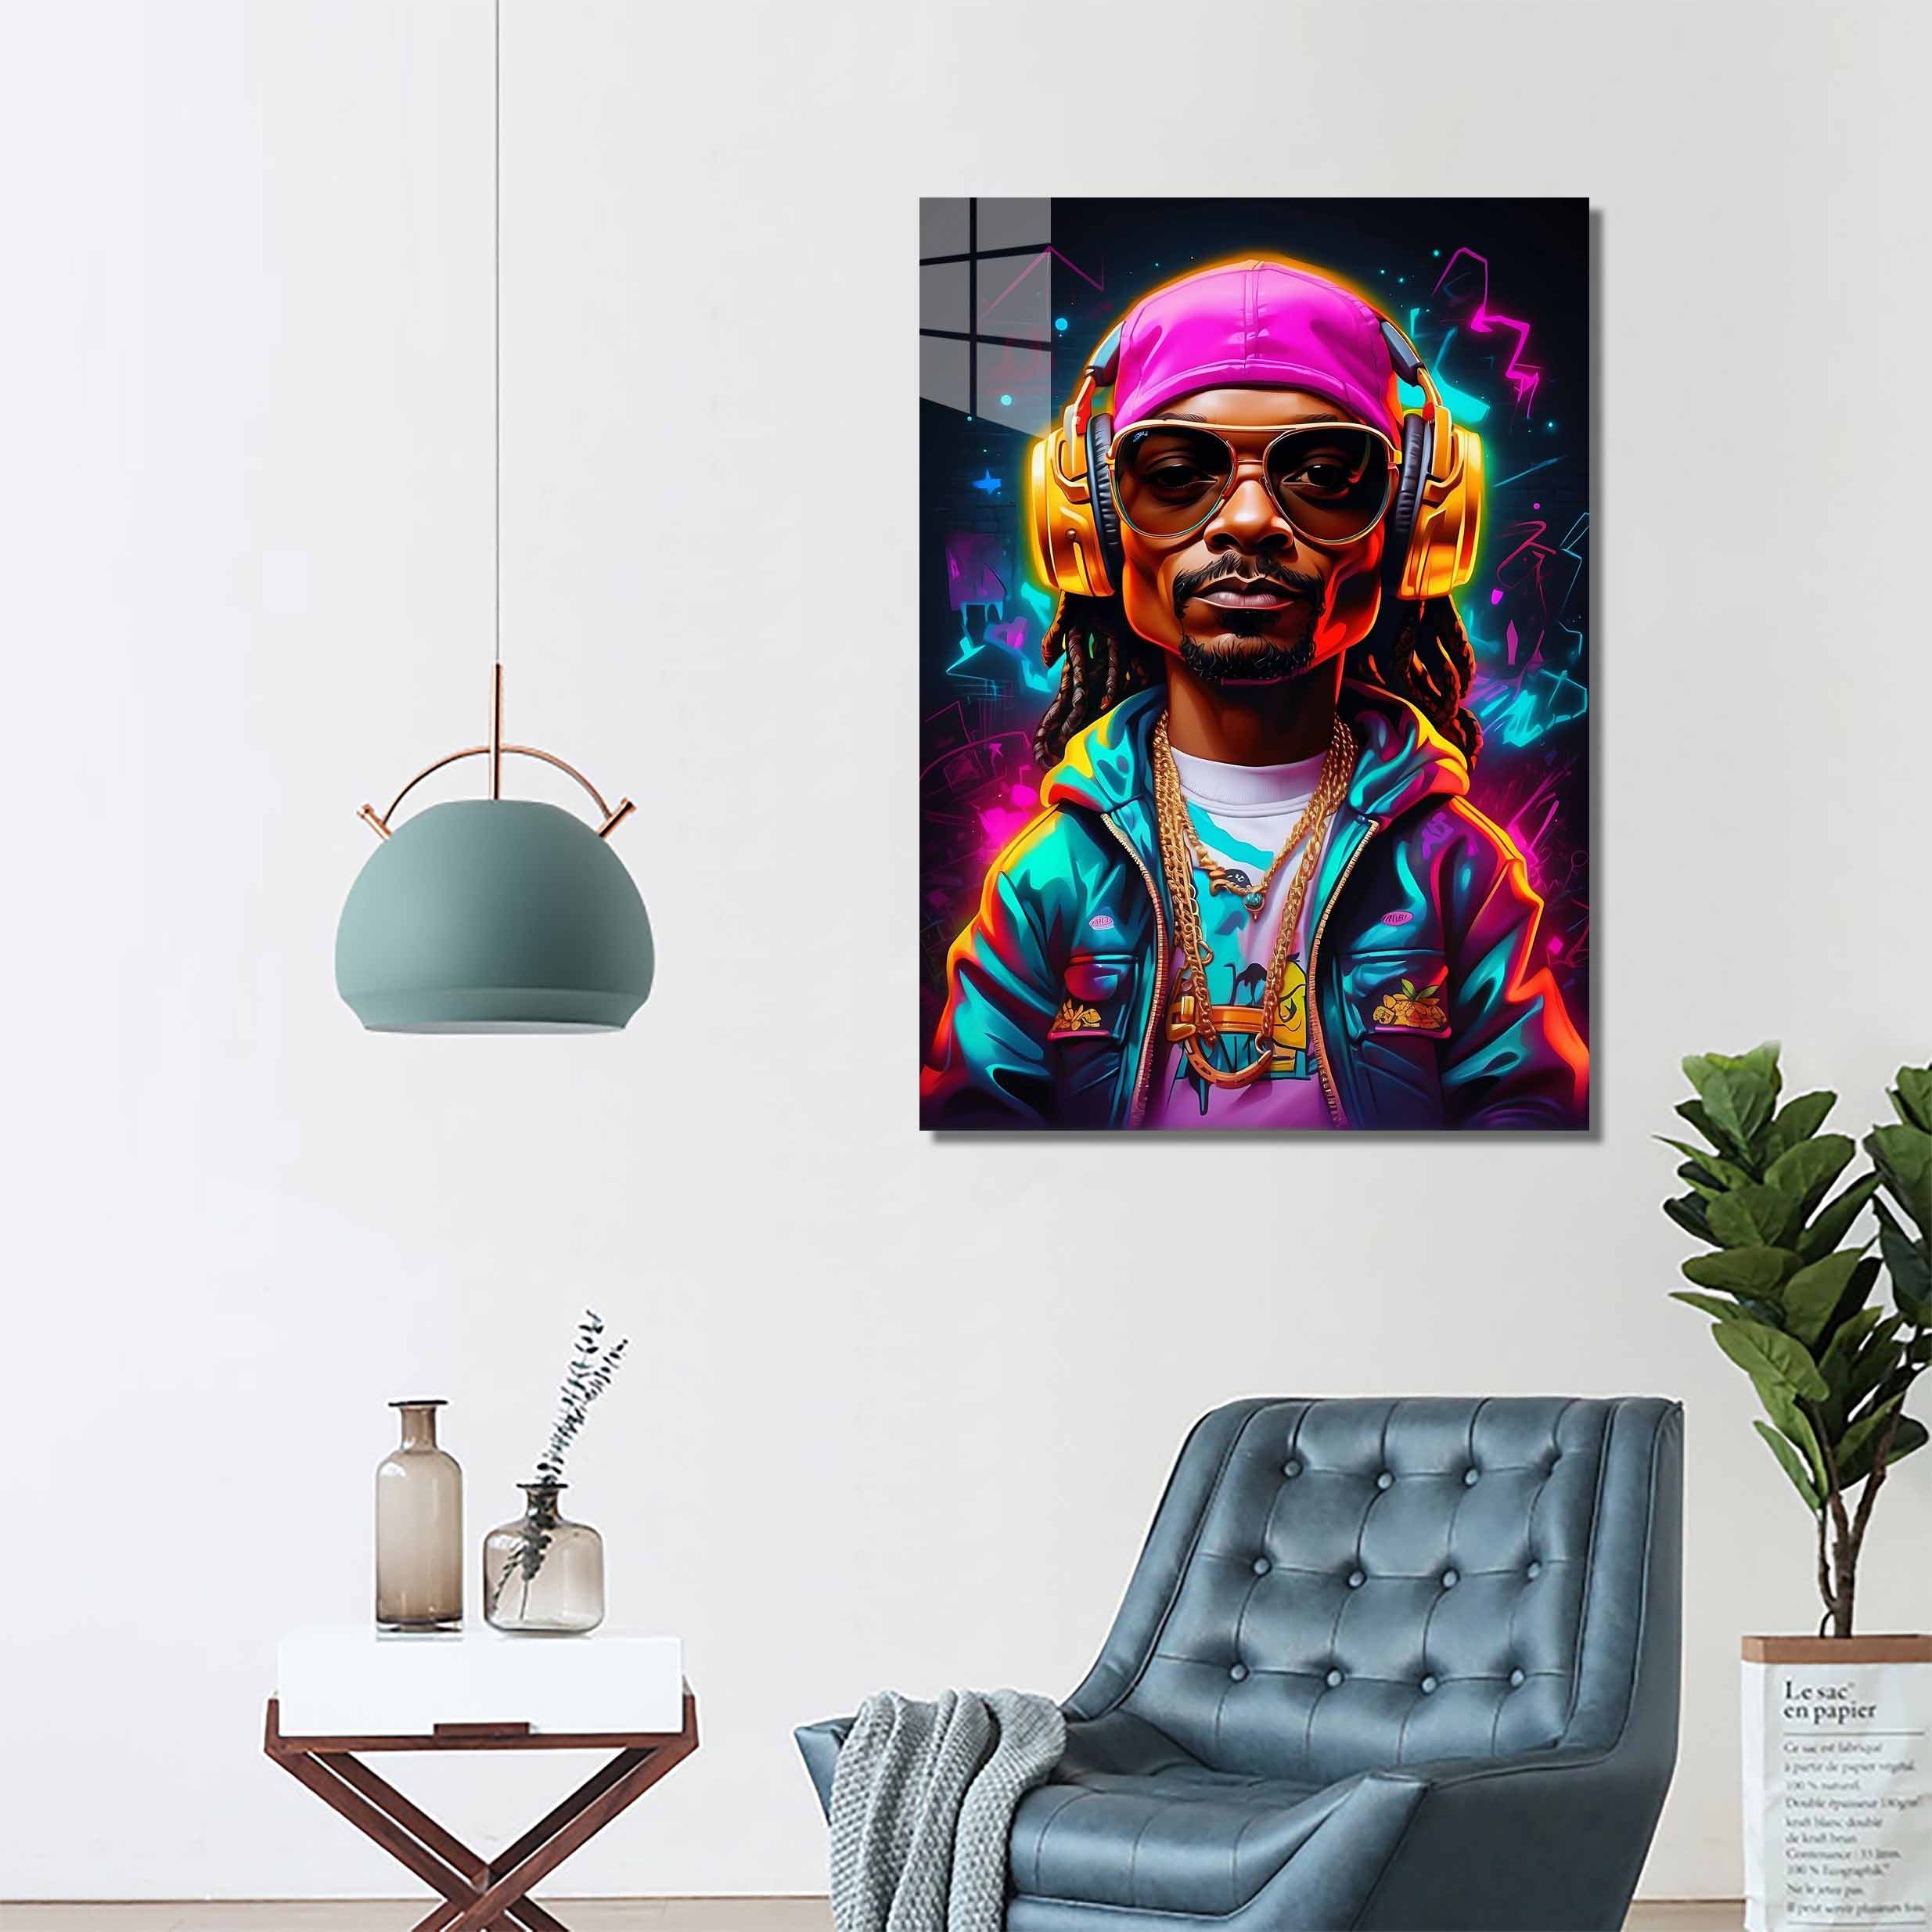 DJ Snoop Dogg-designed by @Vivid Art Studios